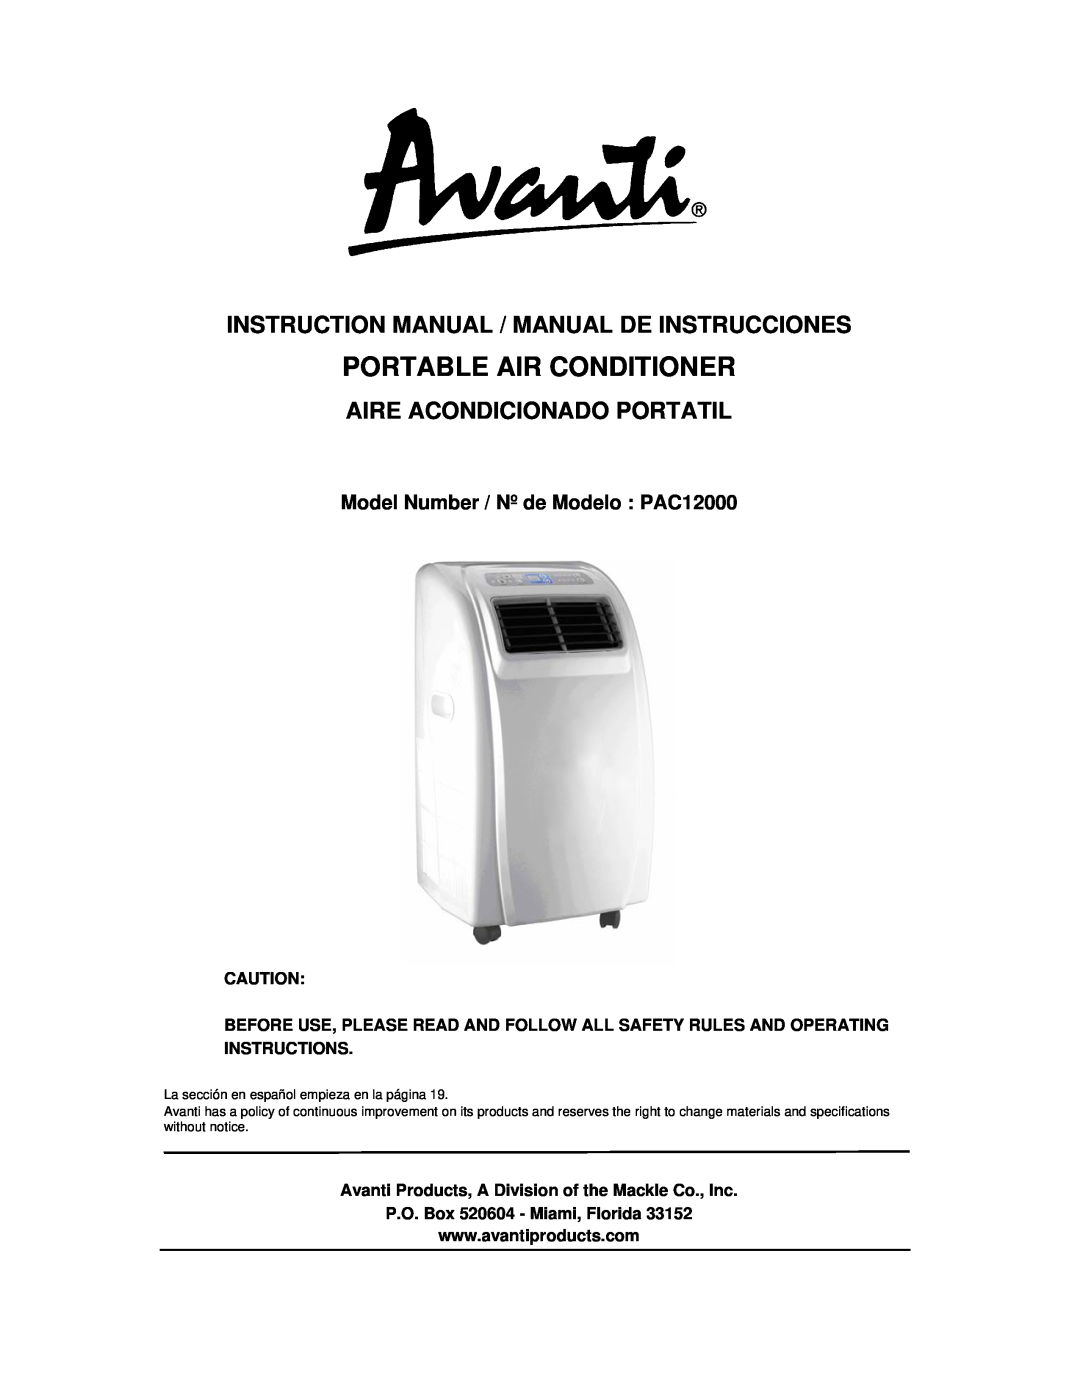 Avanti instruction manual Aire Acondicionado Portatil, Model Number / Nº de Modelo PAC12000, Portable Air Conditioner 